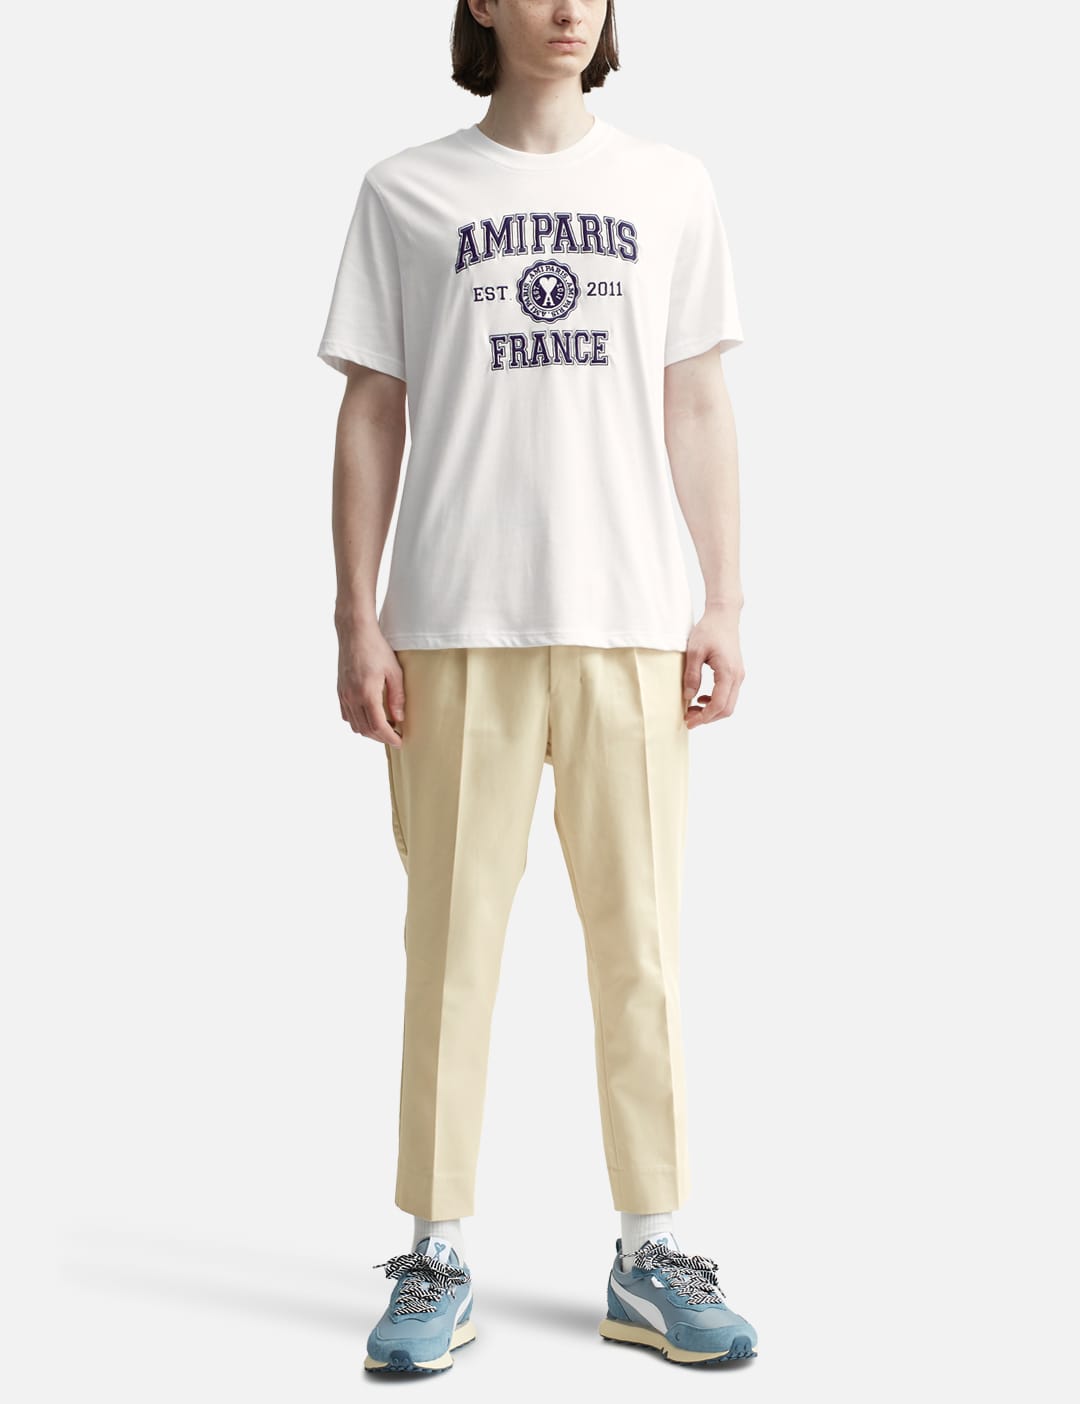 Ami - Ami Paris フランス Tシャツ | HBX - ハイプビースト(Hypebeast